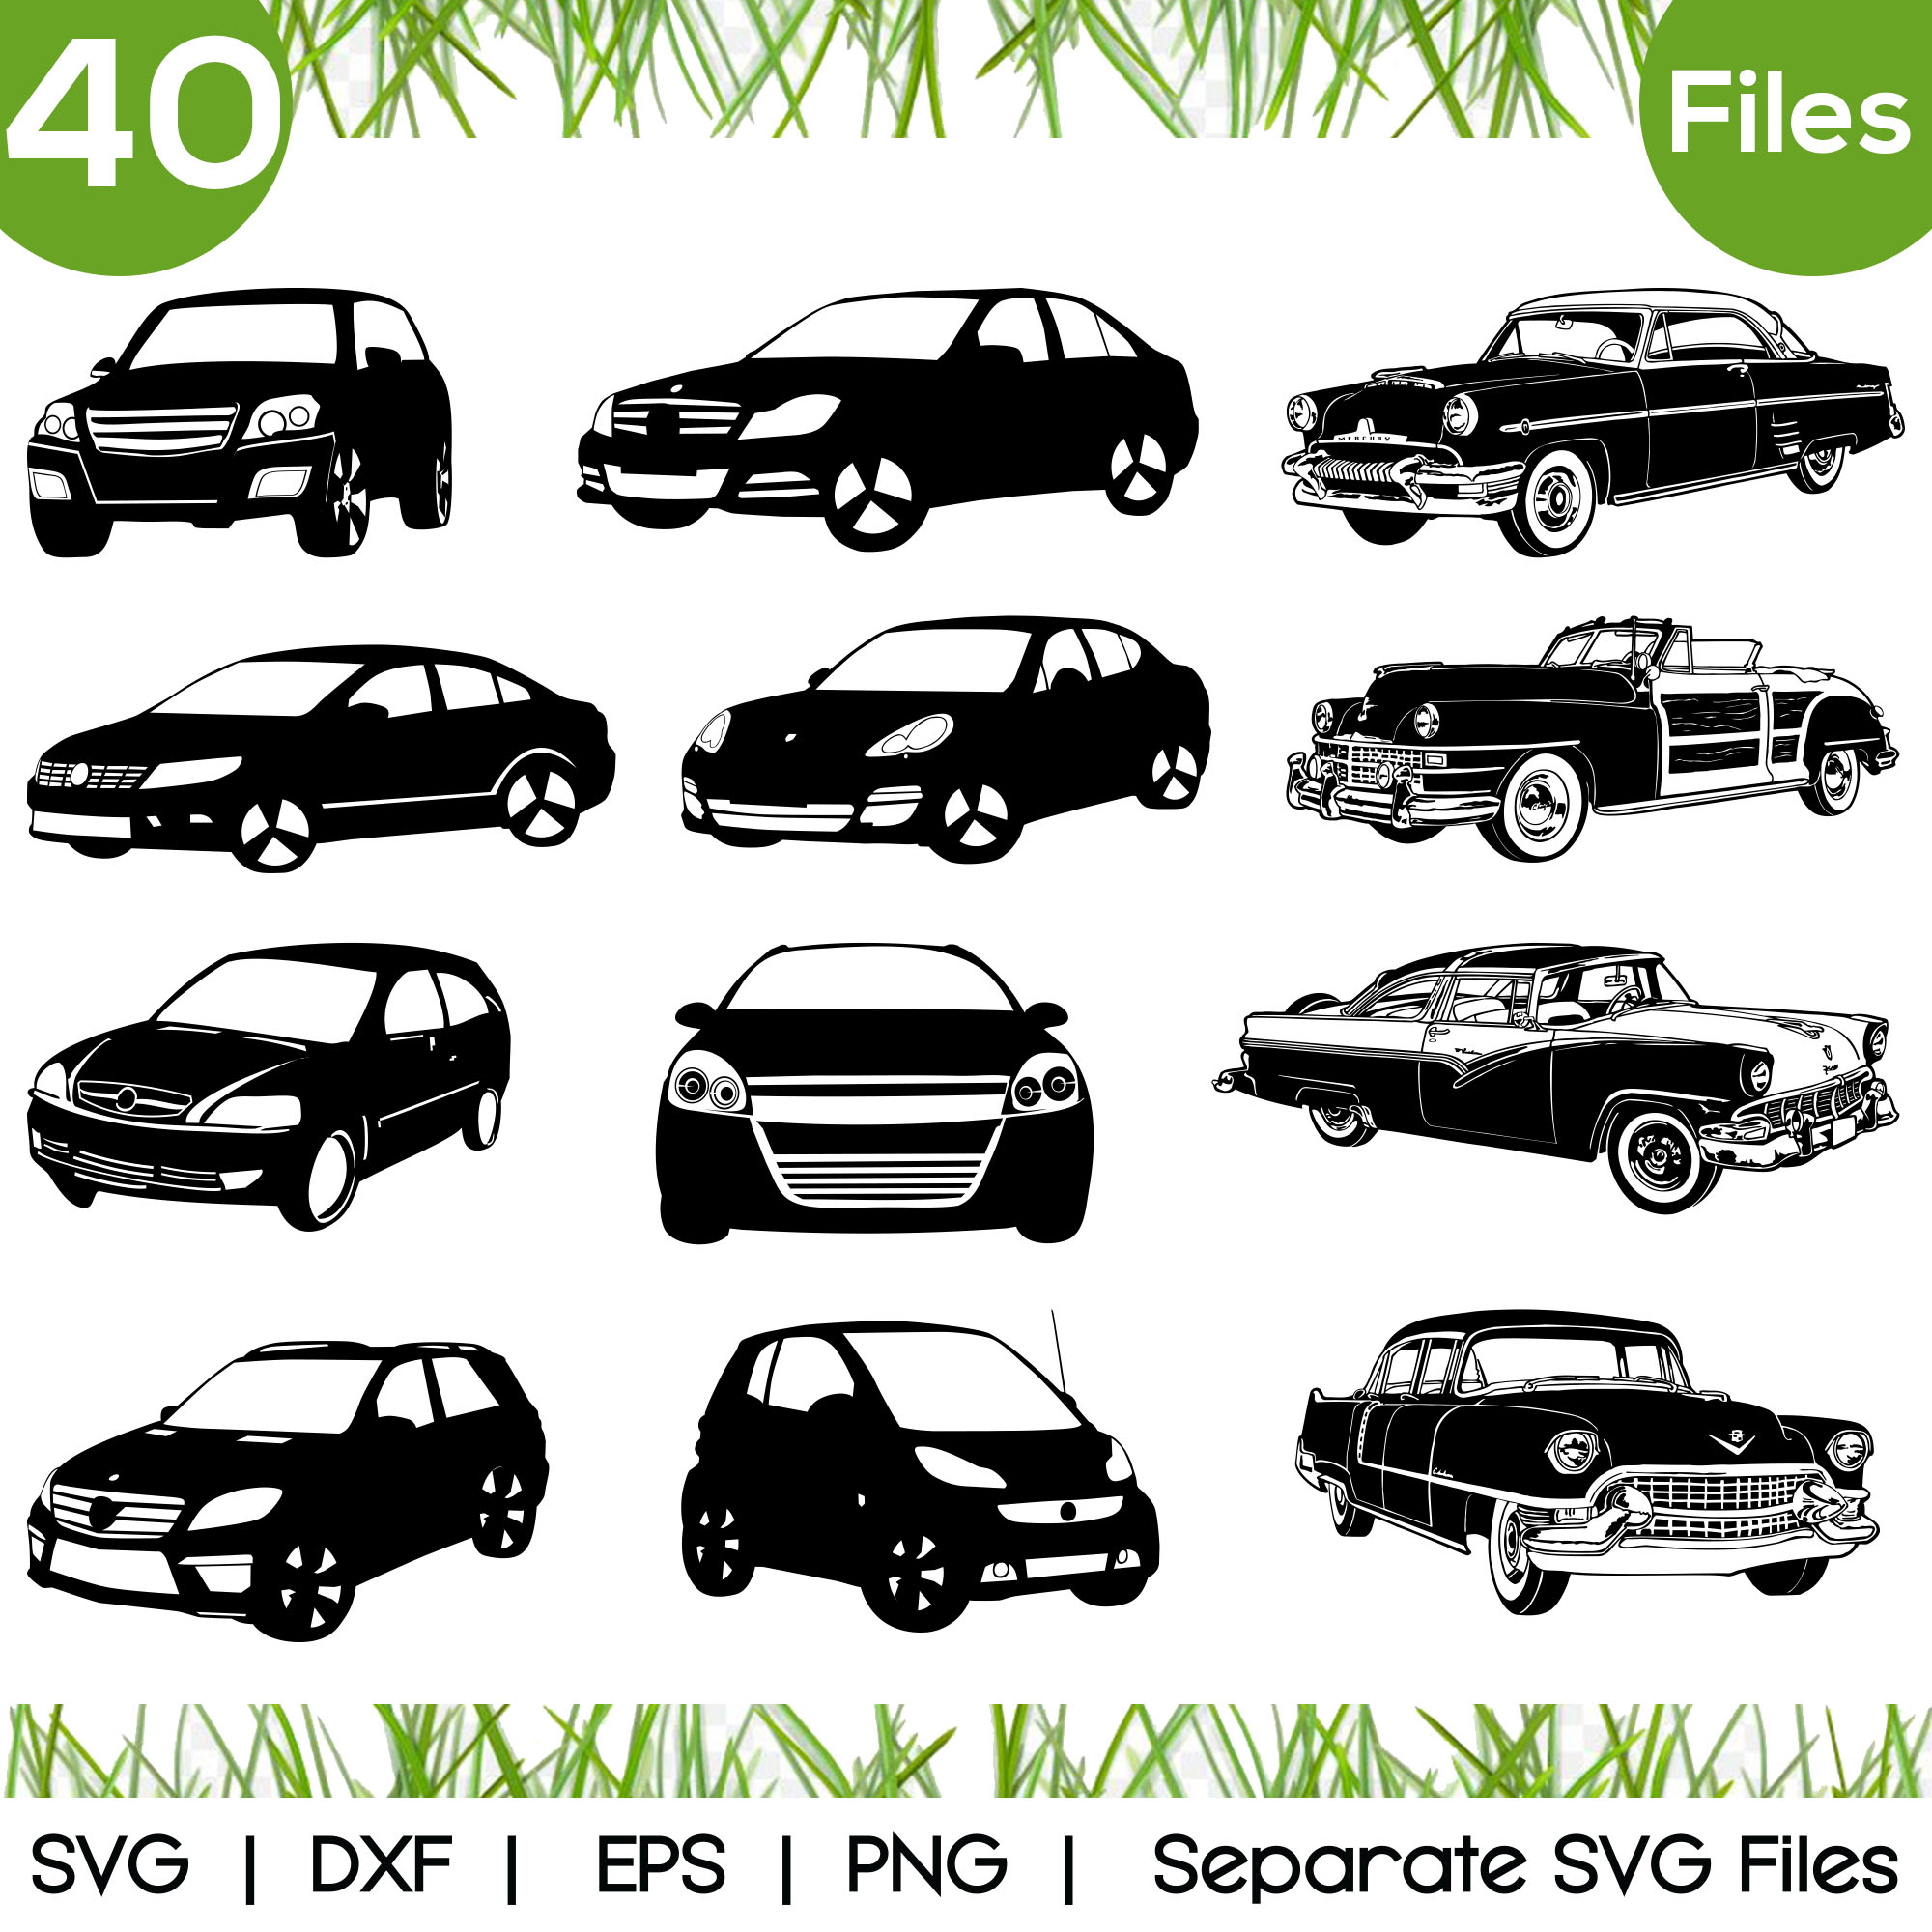 Cars SVG Cut Files - vector svg format